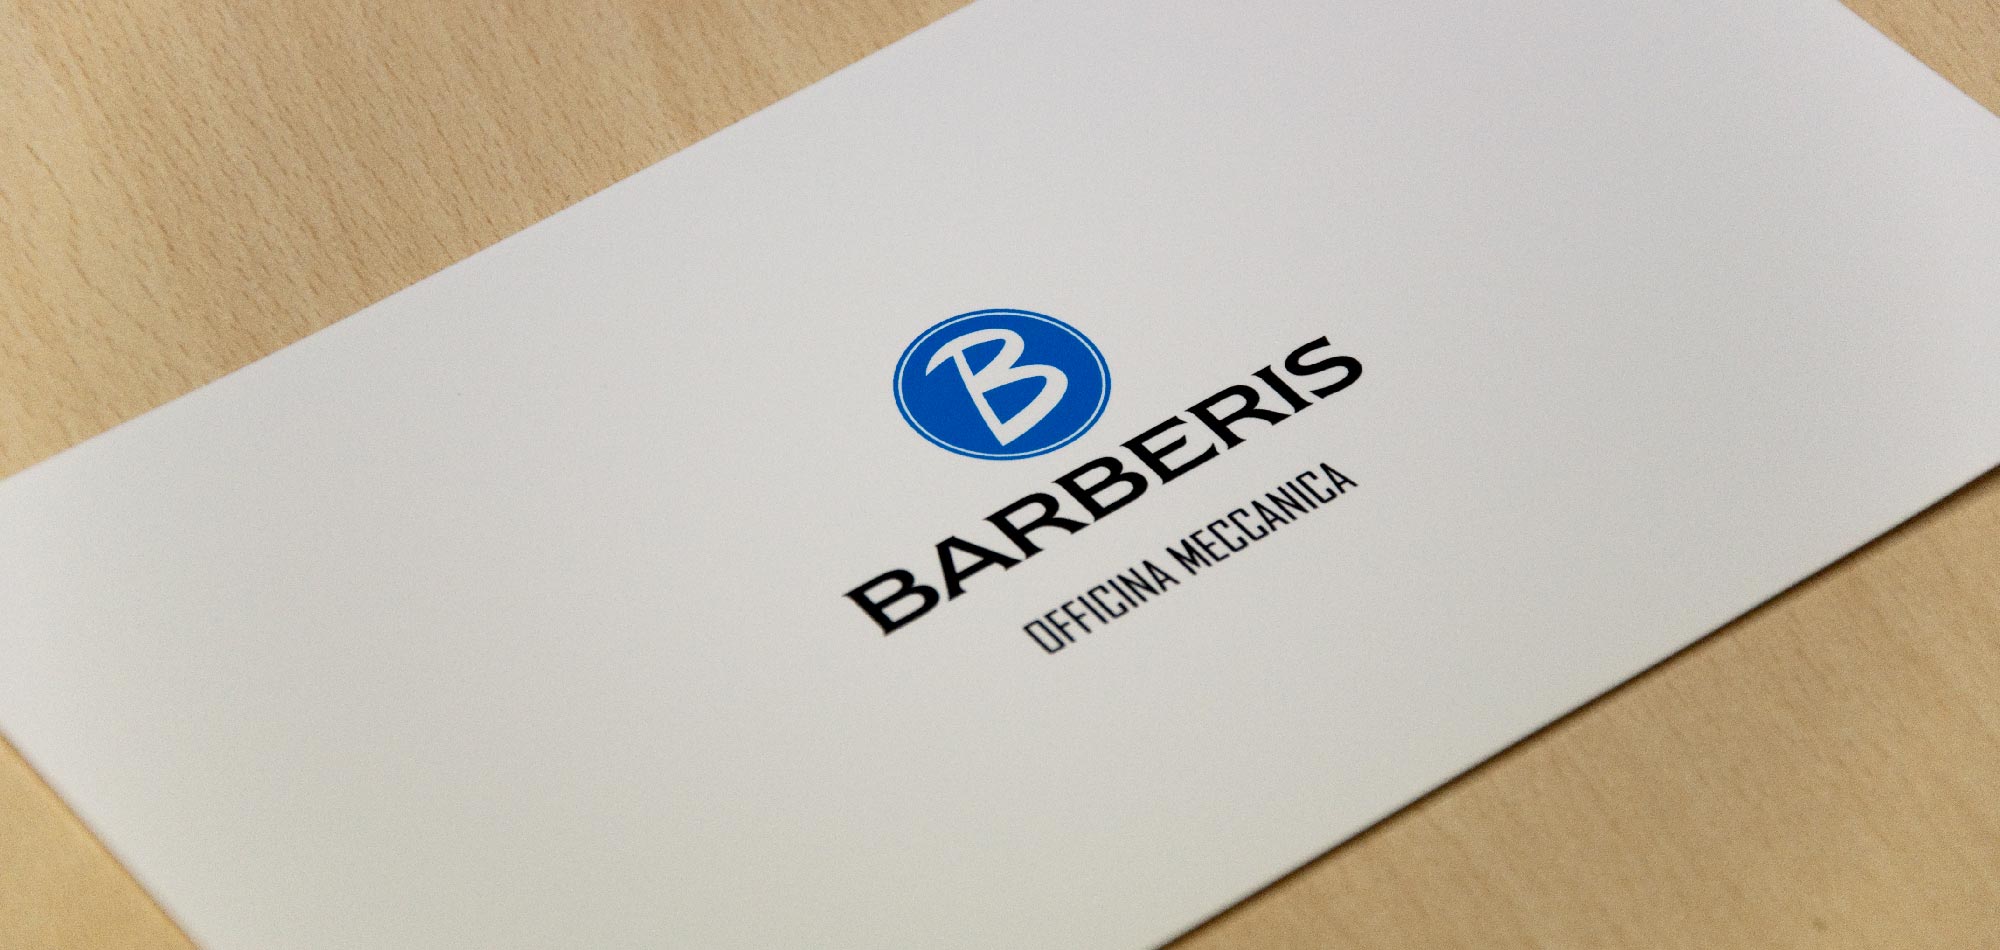 Officina Meccanica Barberis business card